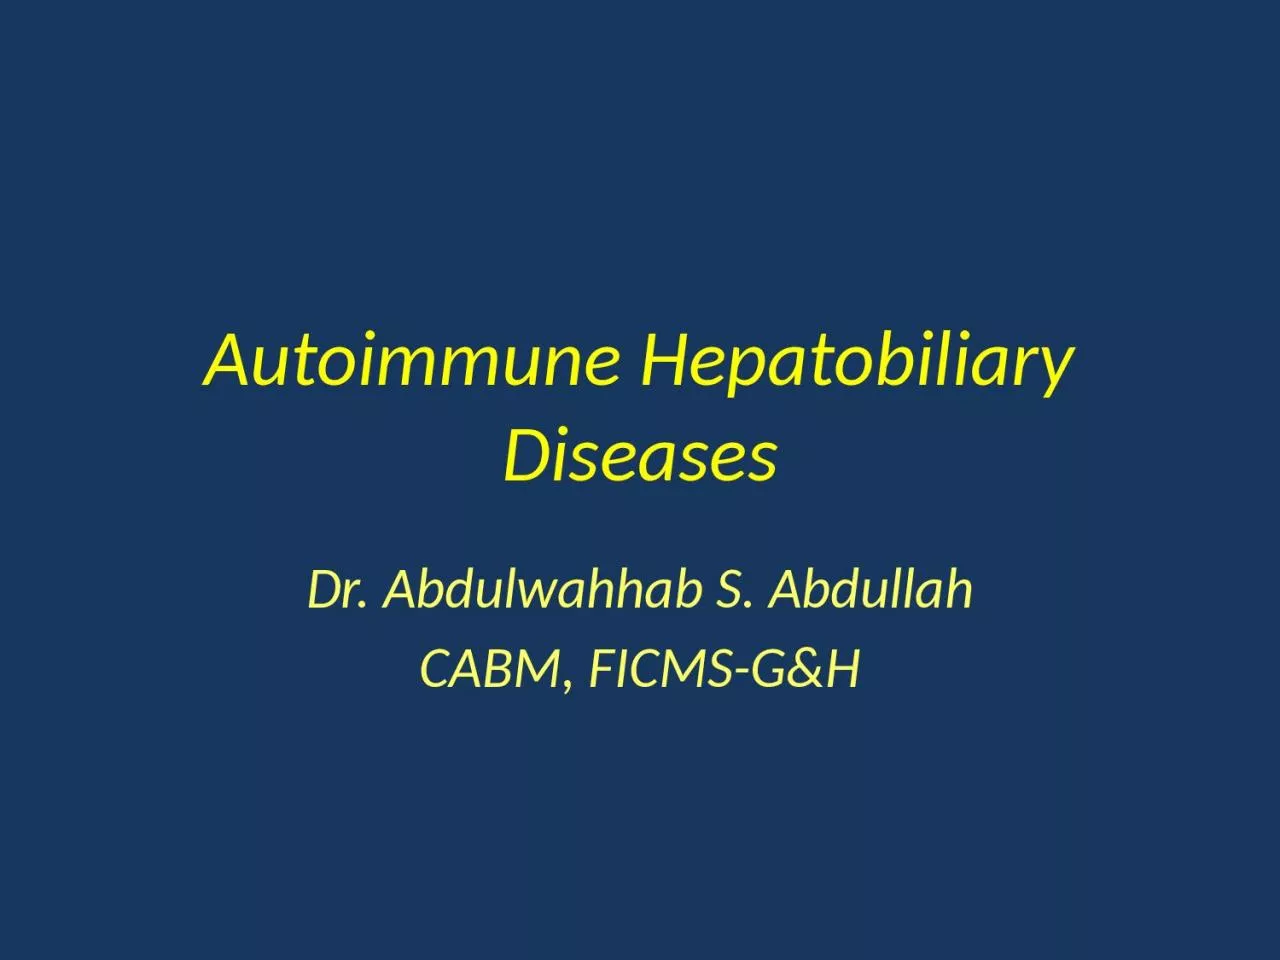 Autoimmune Hepatobiliary Diseases